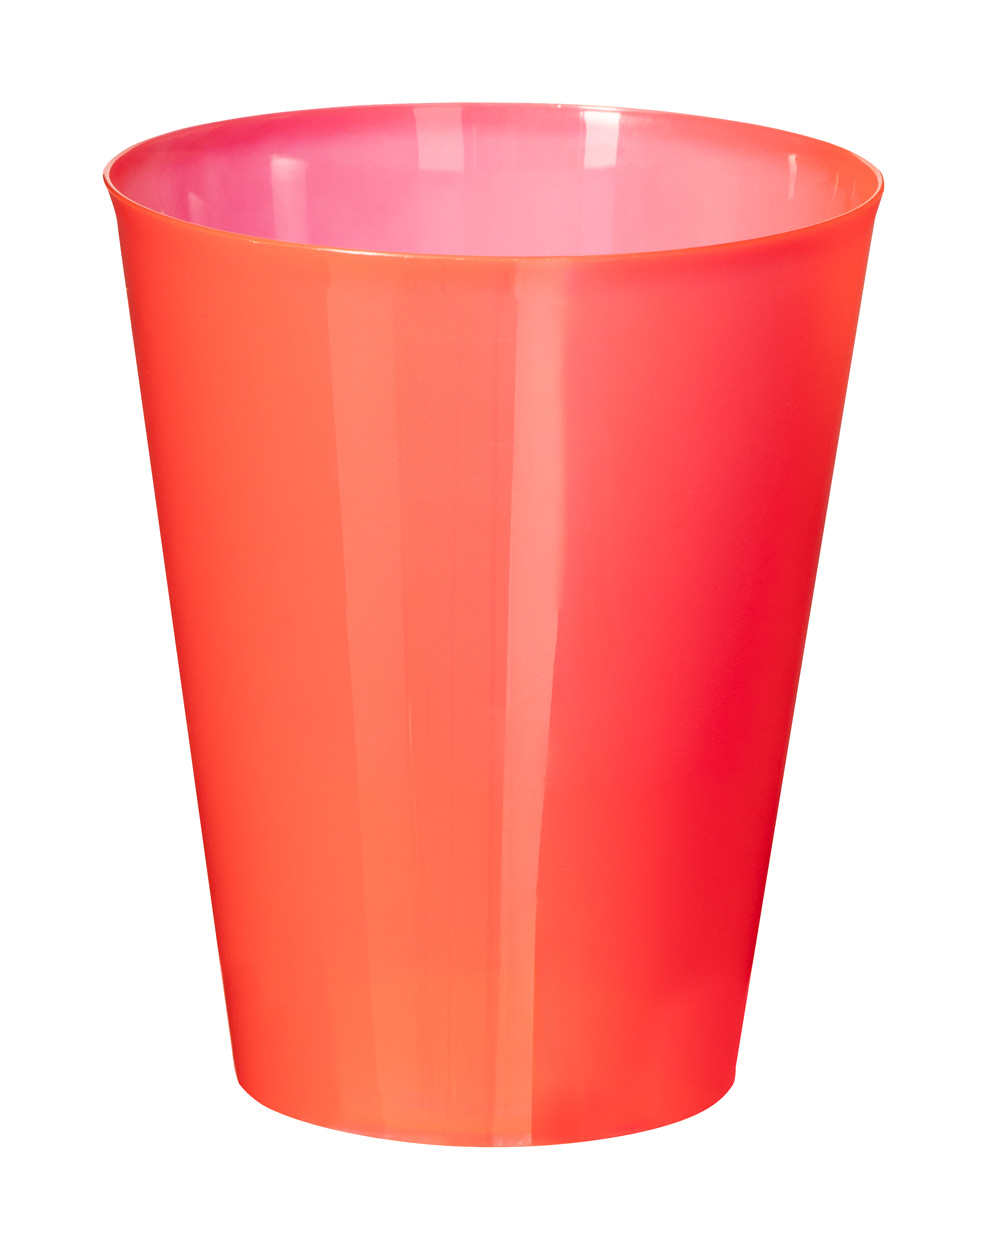 Promo  Colorbert reusable event cup